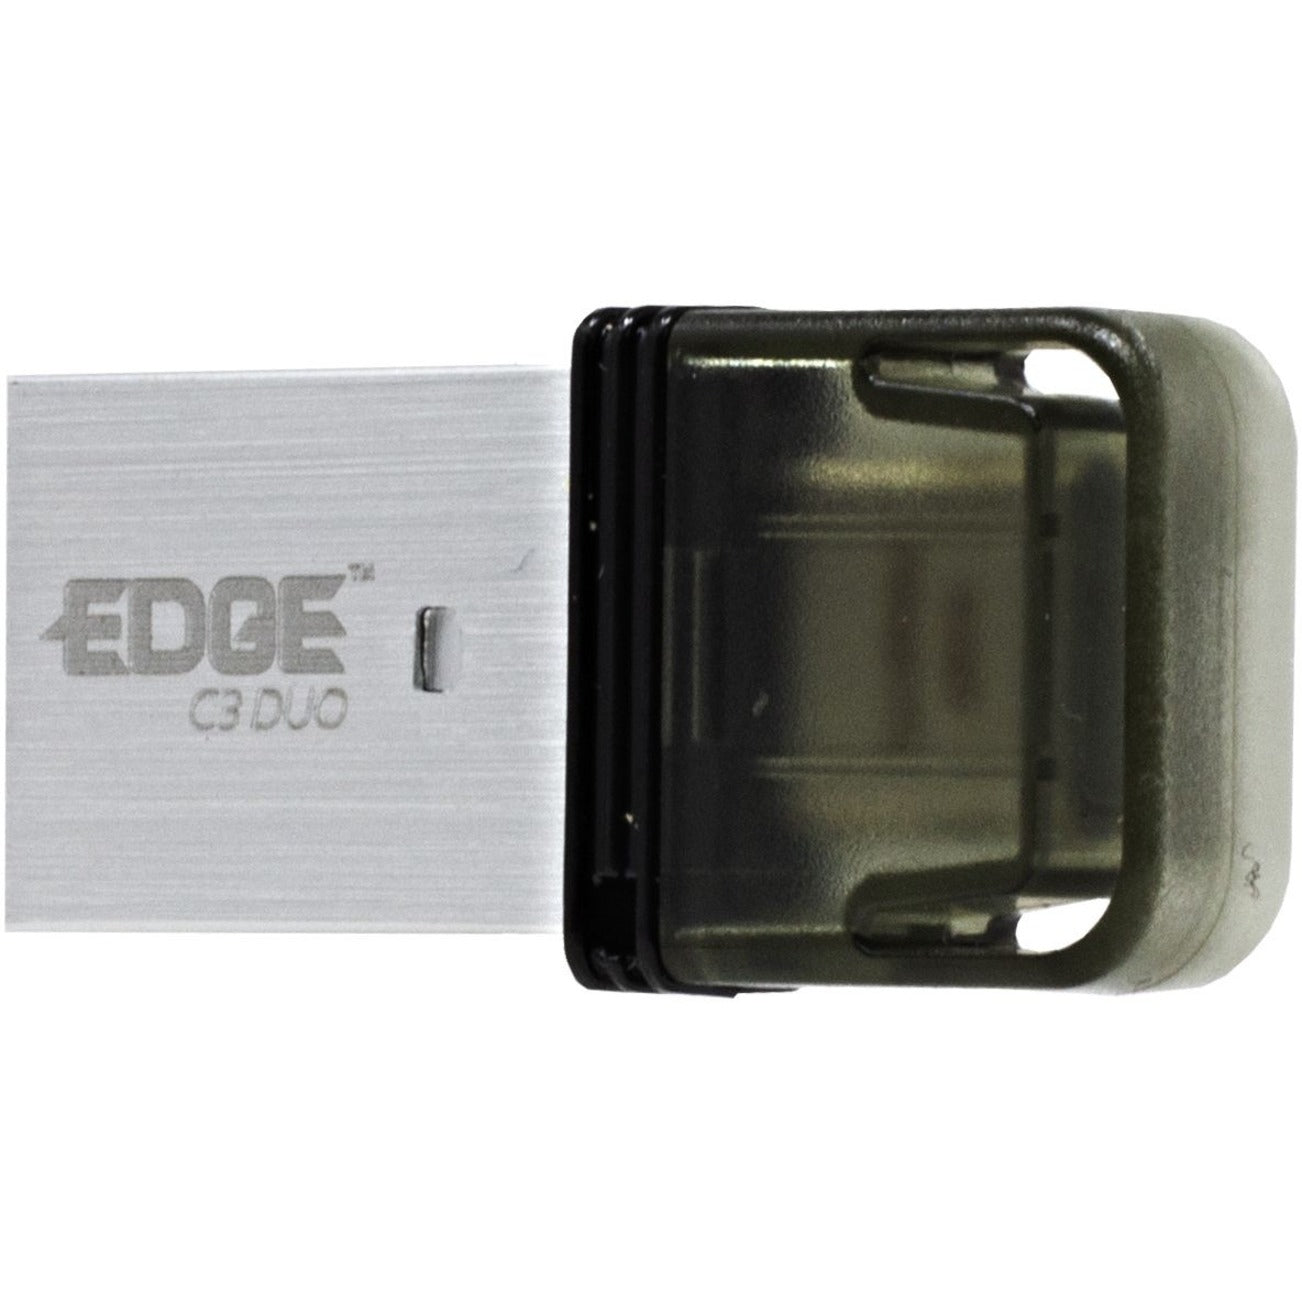 EDGE 64GB C3 Duo USB 3.1 Gen 1 Type-C Flash Drive